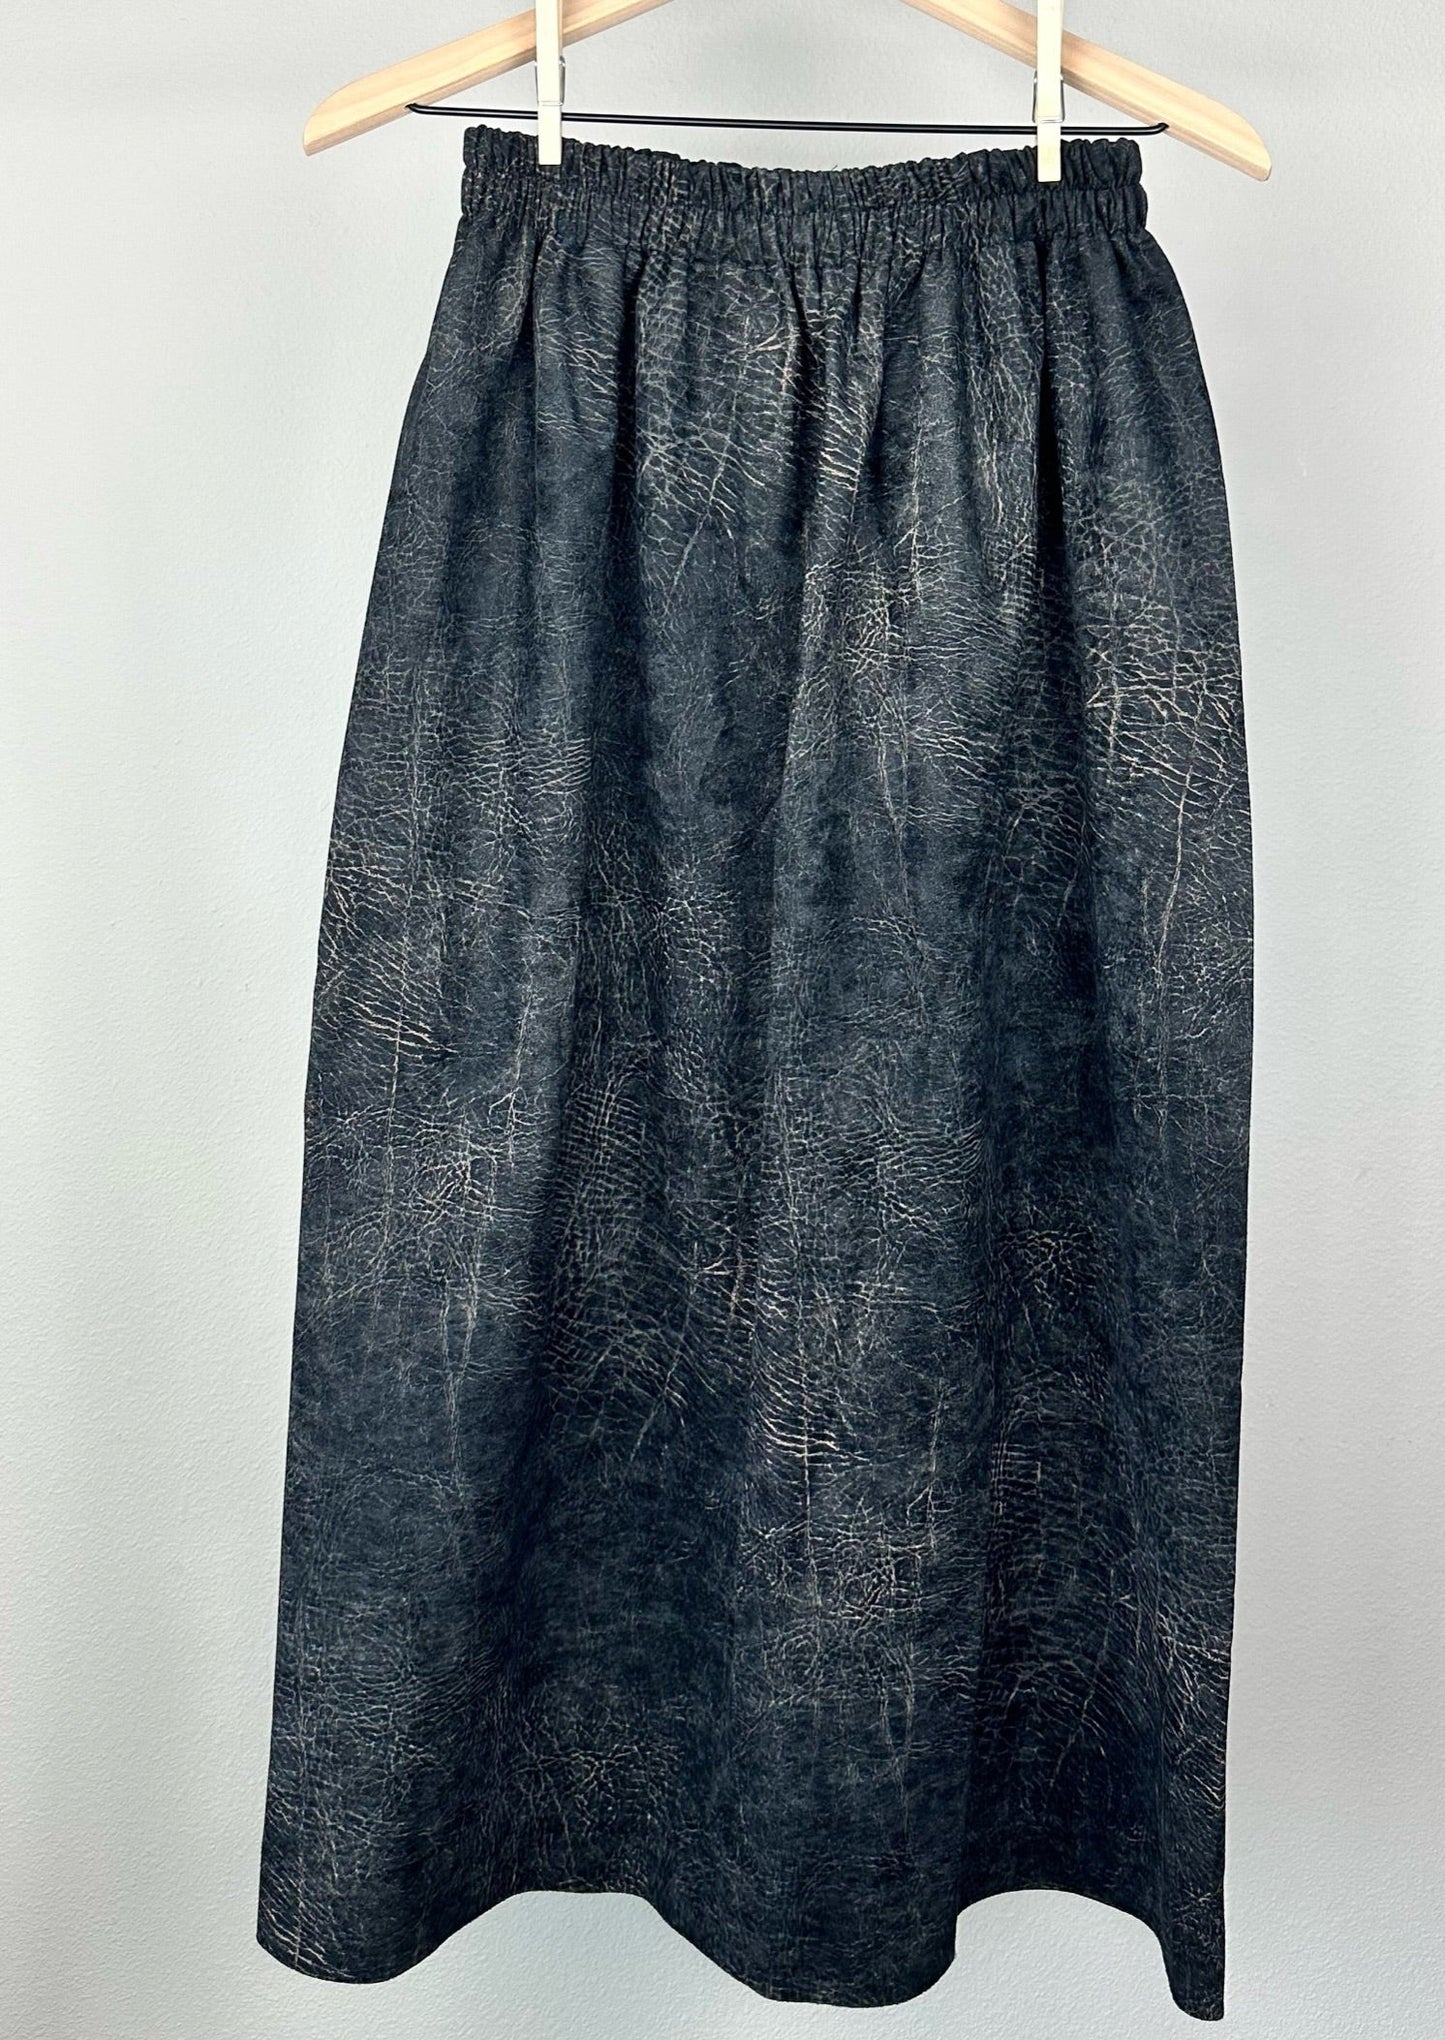 Black Concrete Skirt Set